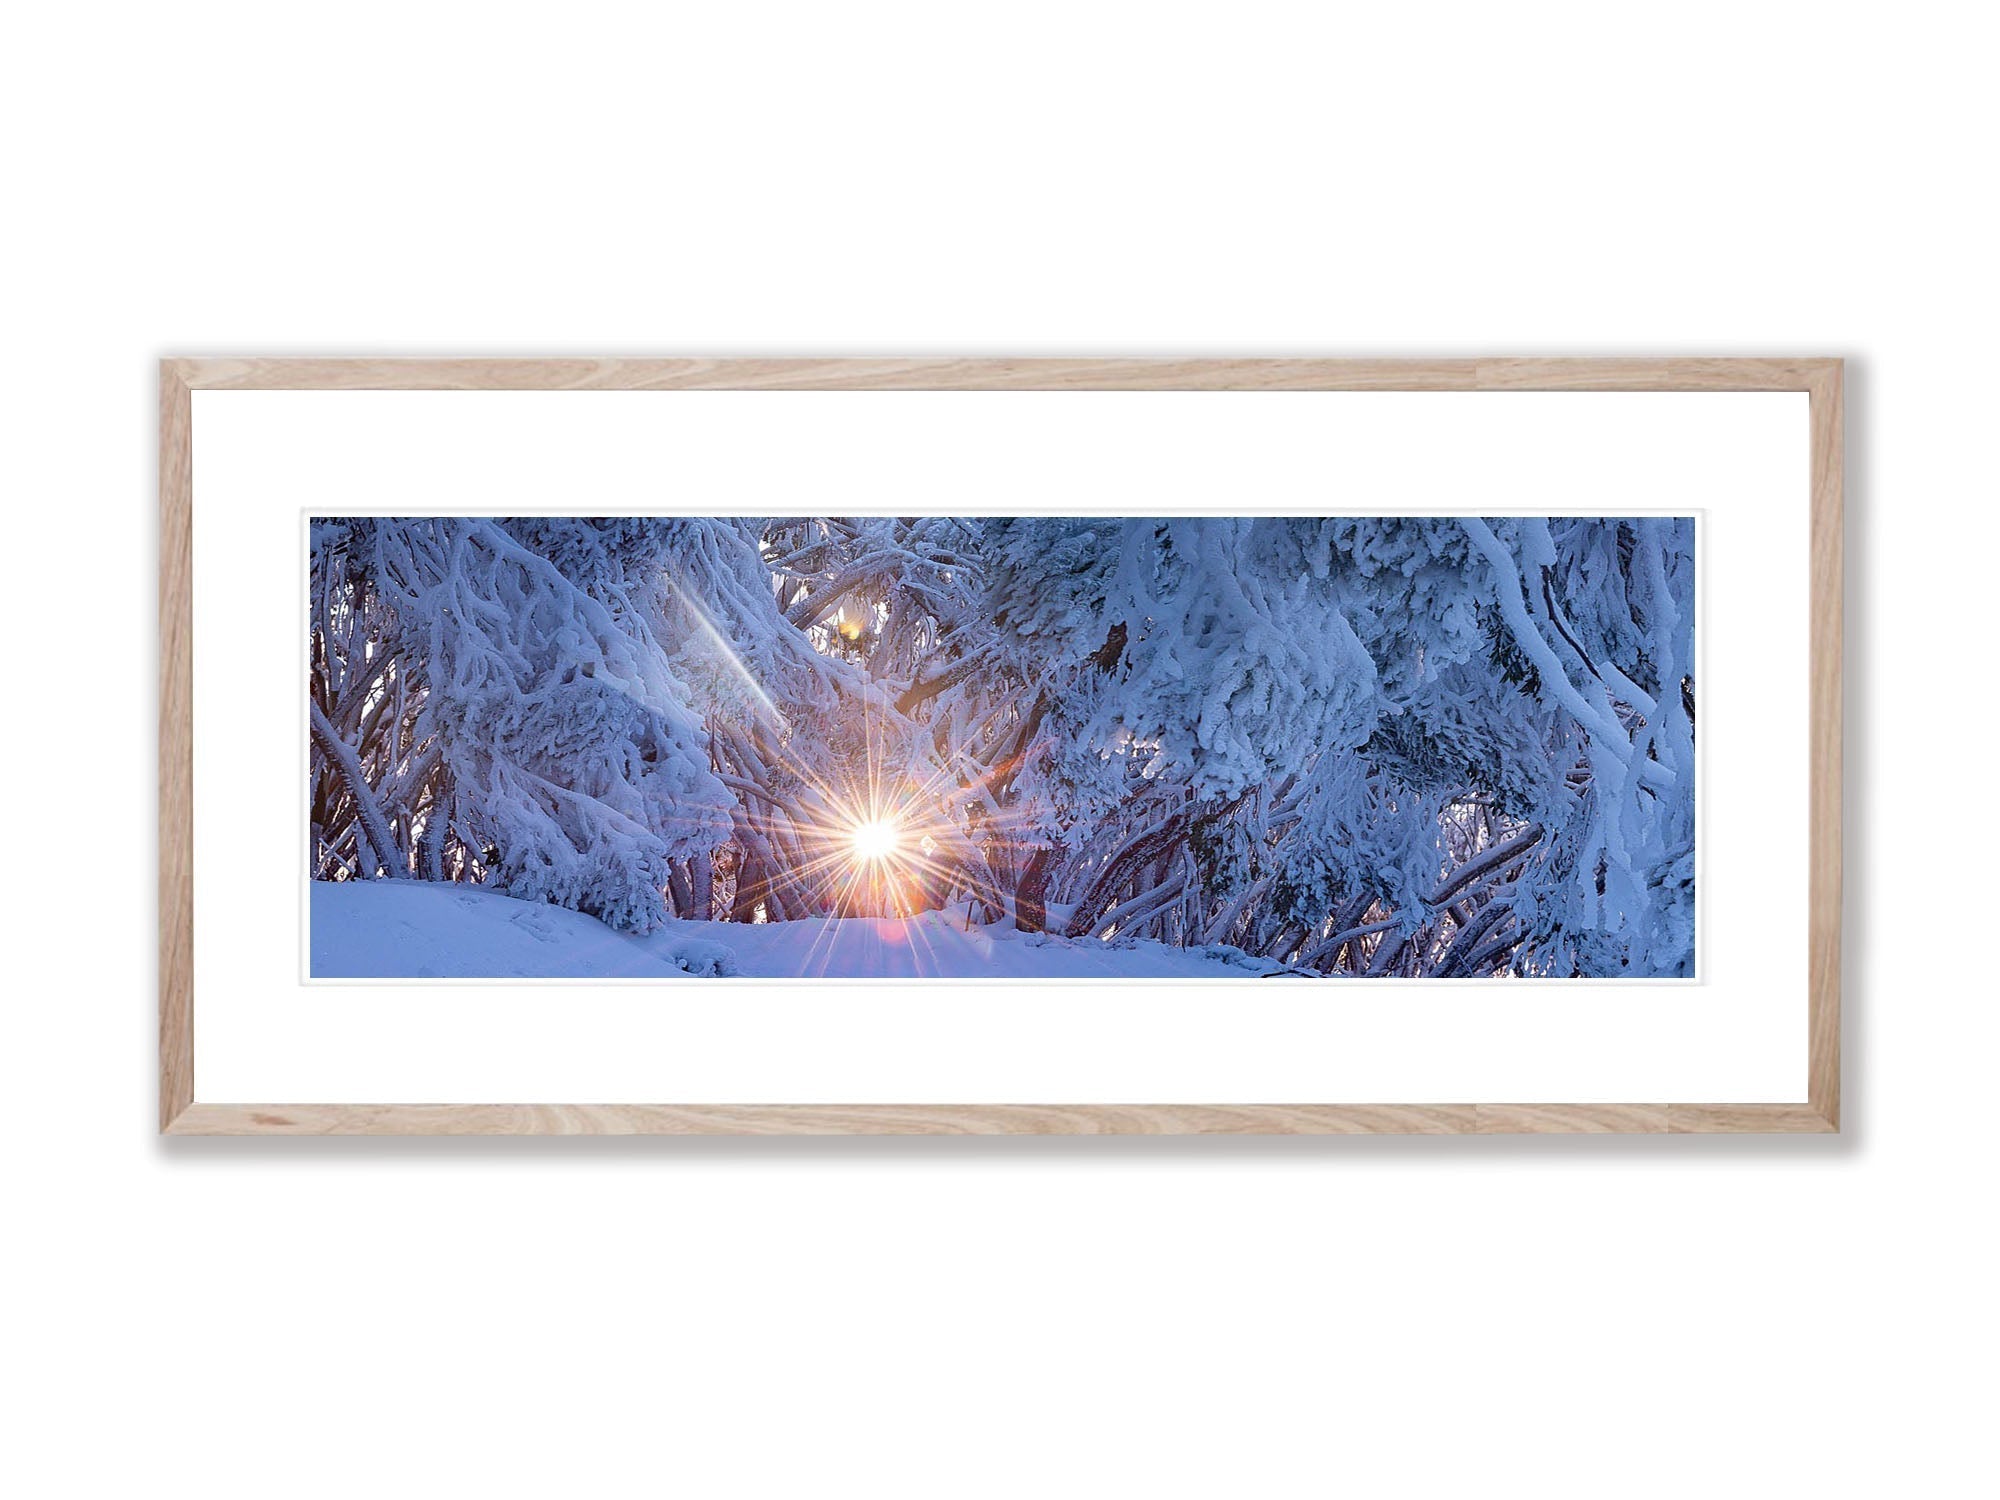 ARTWORK INSTOCK - Sunrise Though Frozen Snow Gums, Mt Baw Baw, VIC - 150x 75cms Canvas Raw Oak Print